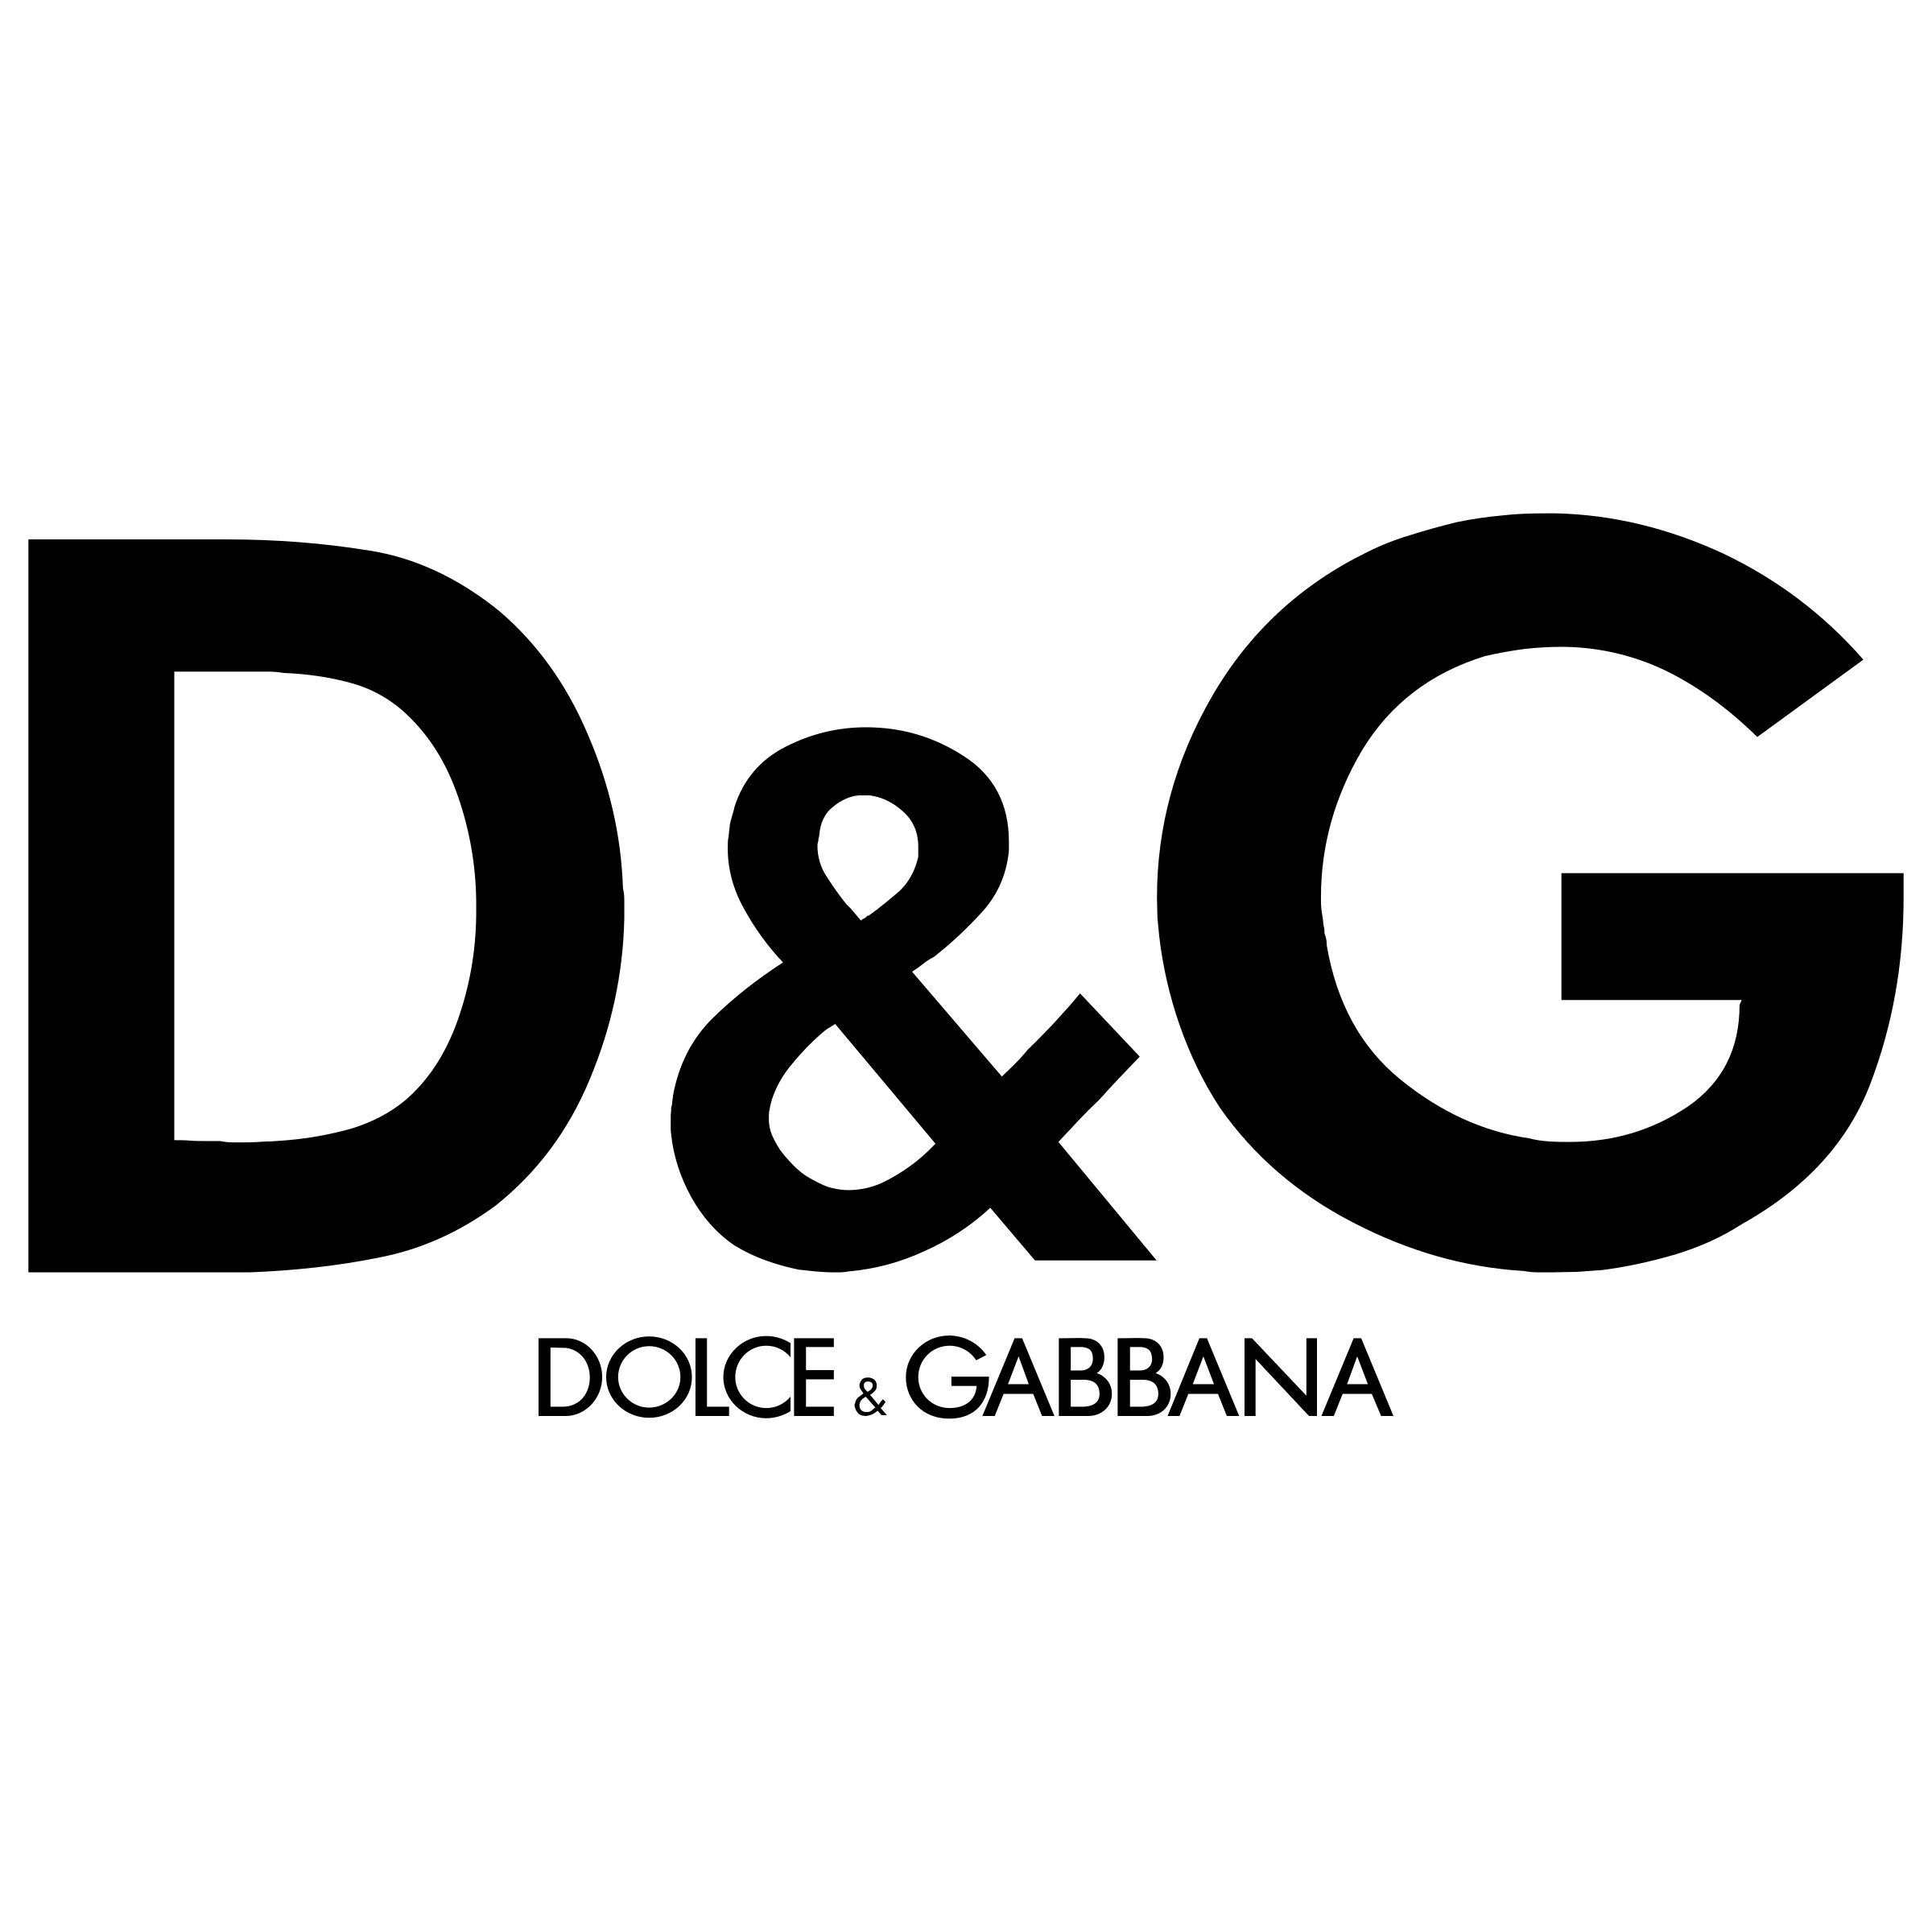 Dolce and Gabbana Logo - Dolce & Gabbana Logo PNG Transparent & SVG Vector - Freebie Supply